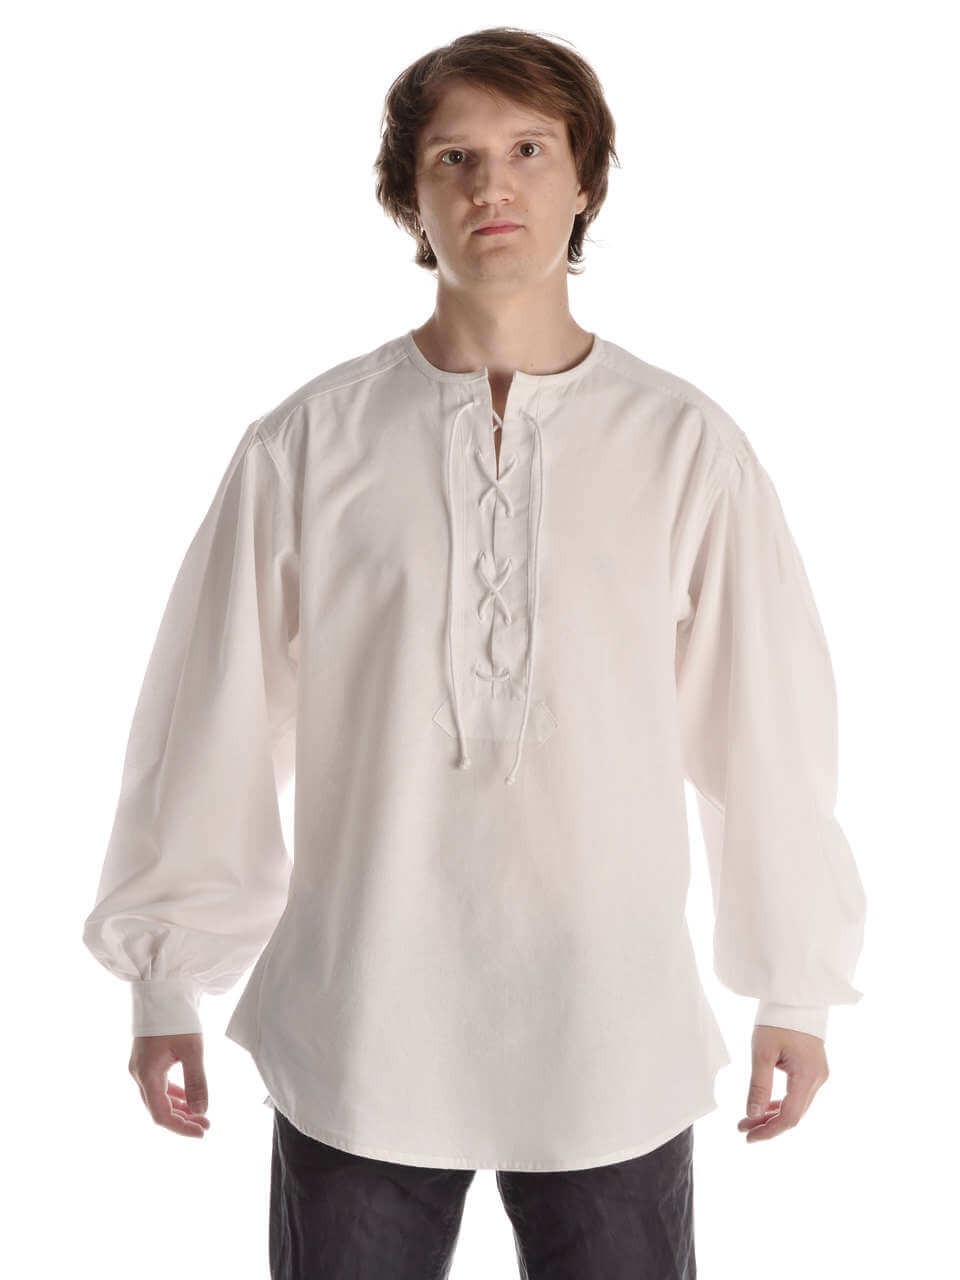 Medieval Coachman Shirt